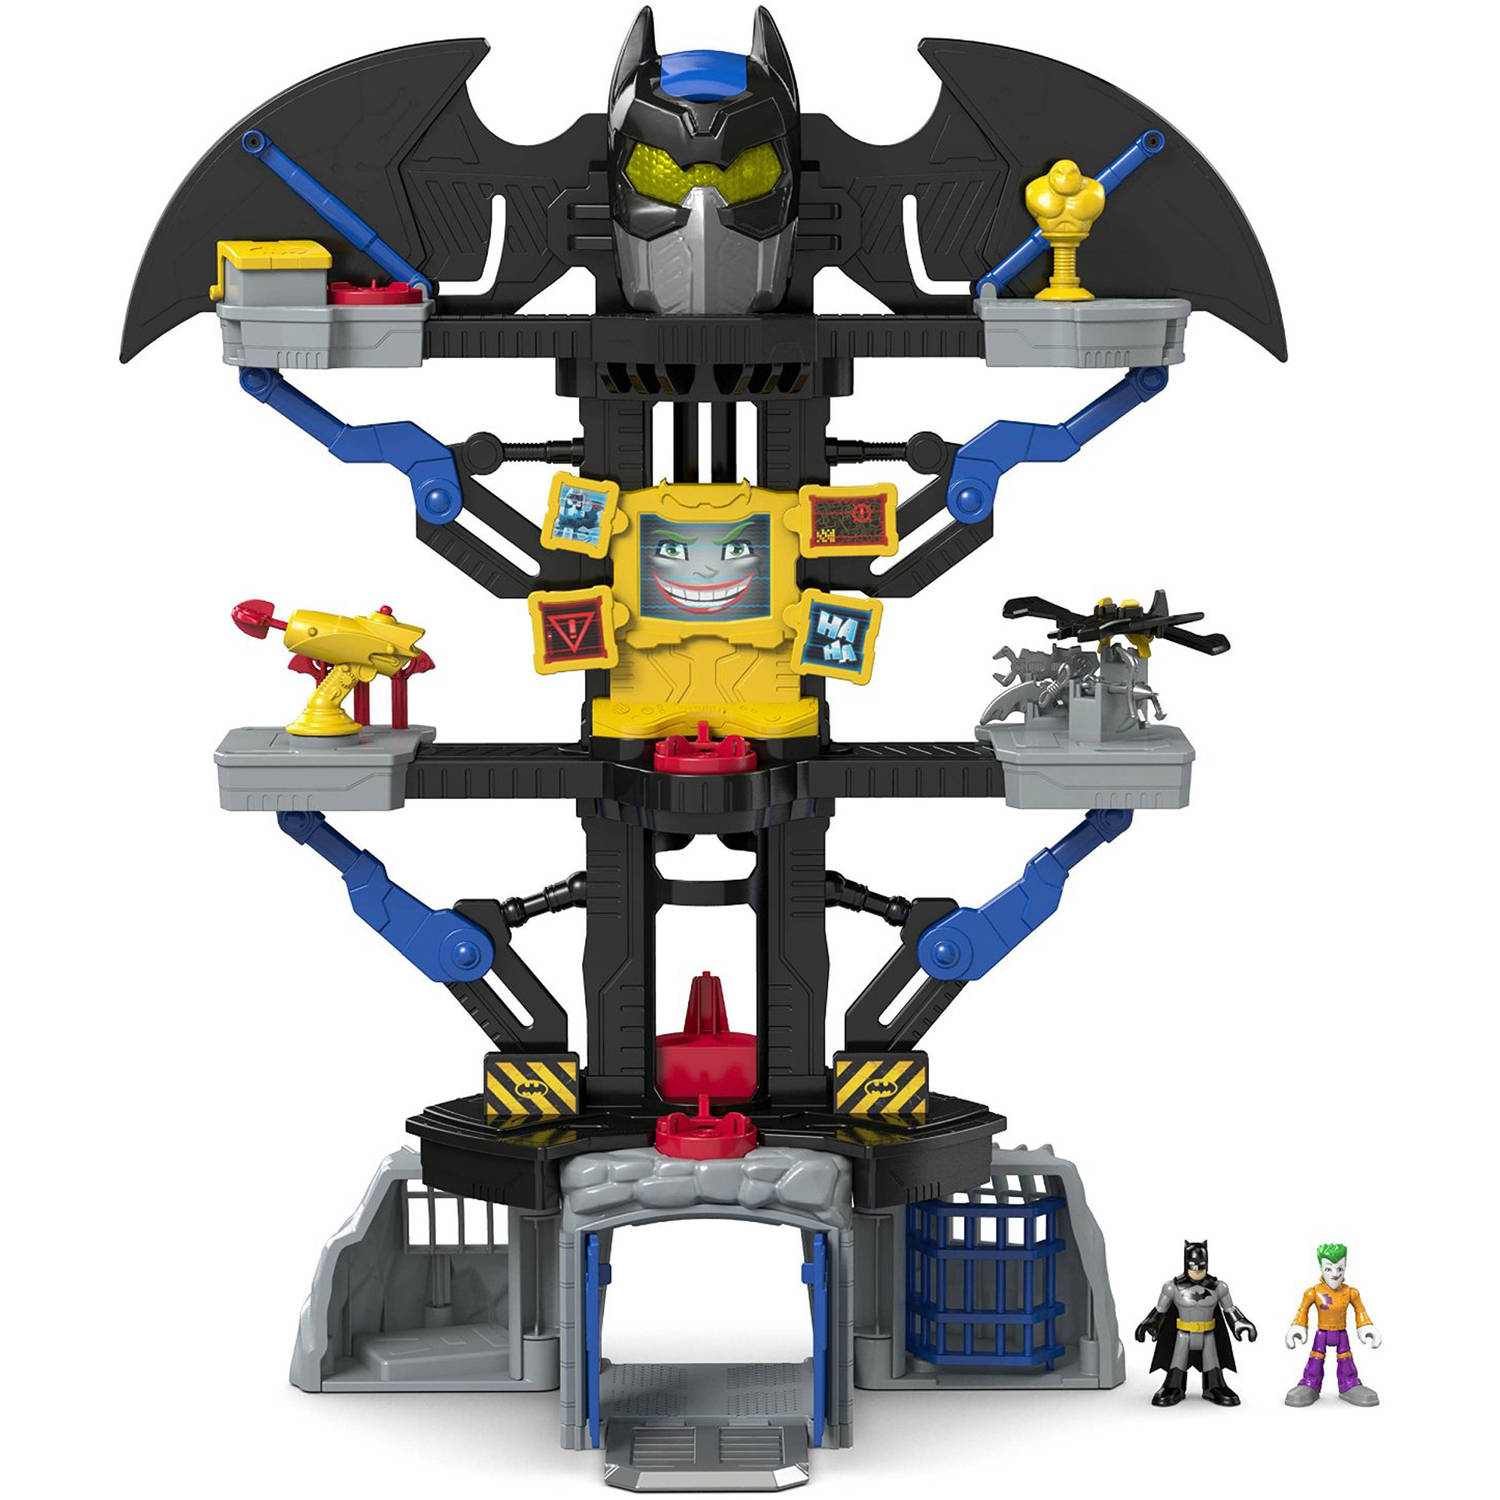 Imaginext DC Super Friends Transforming Batcave - image 1 of 16